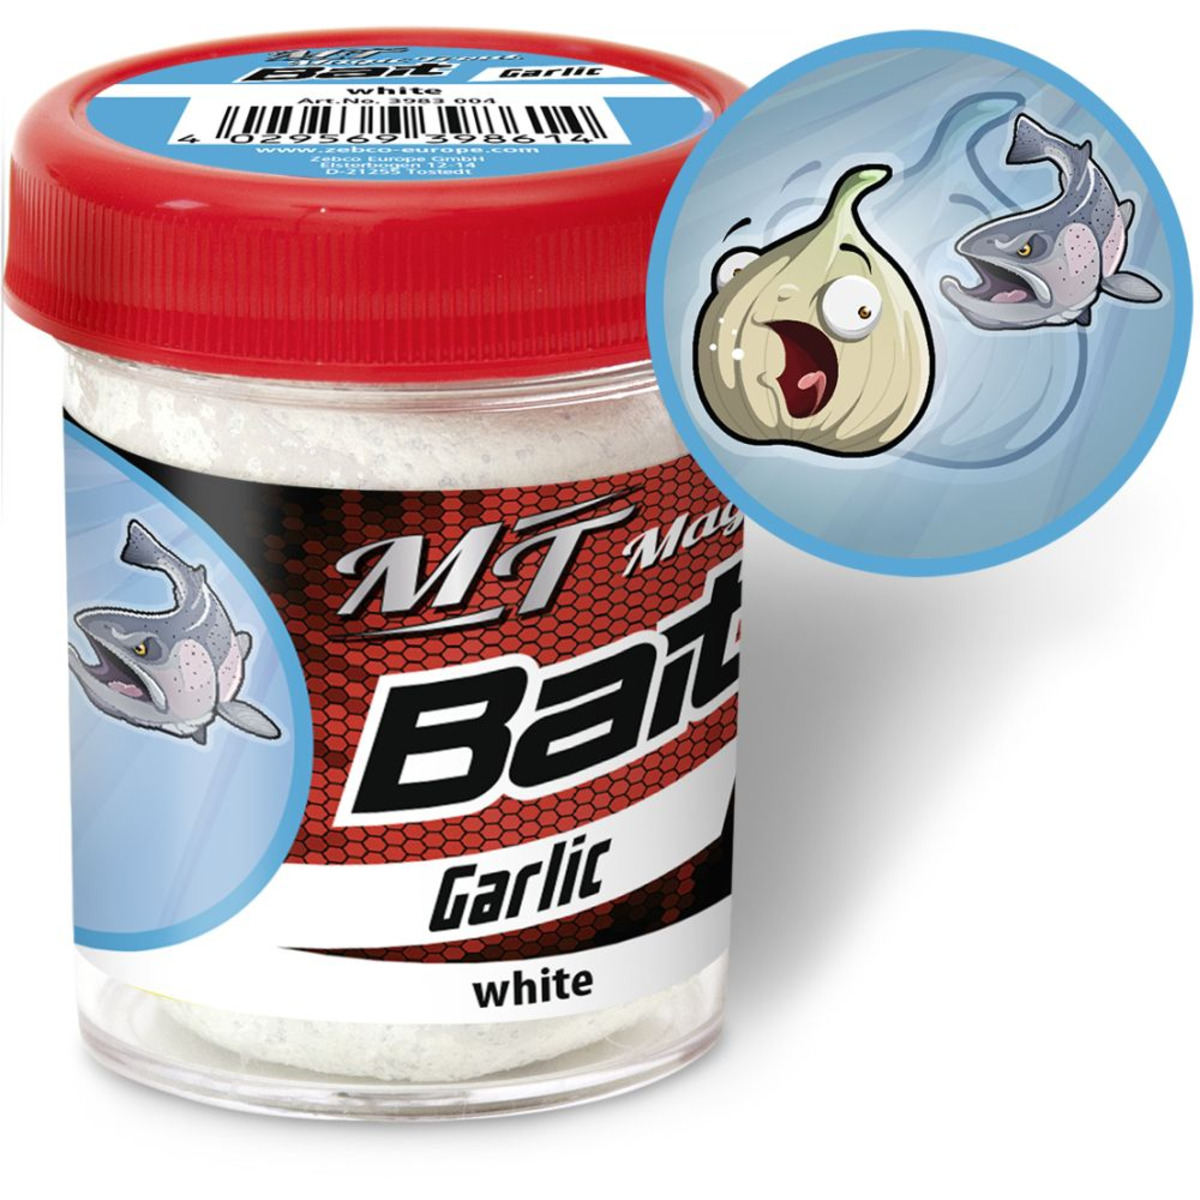 Magic Trout Trout Bait - Garlic white